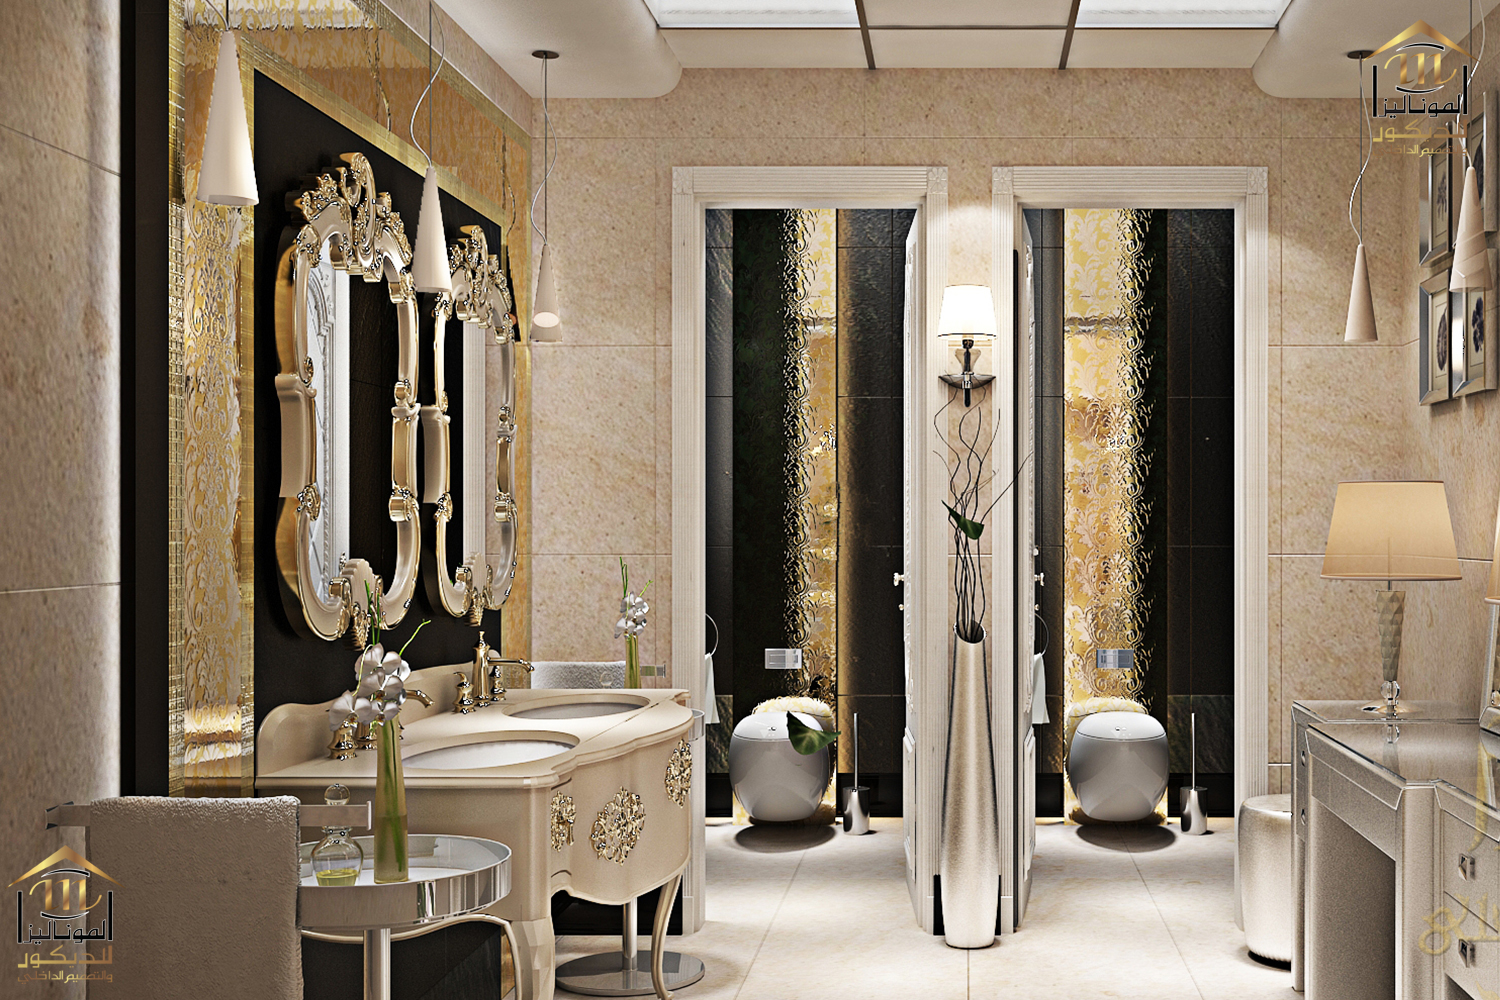 almonaliza group_decoration&interior design_bathrooms (6).jpg